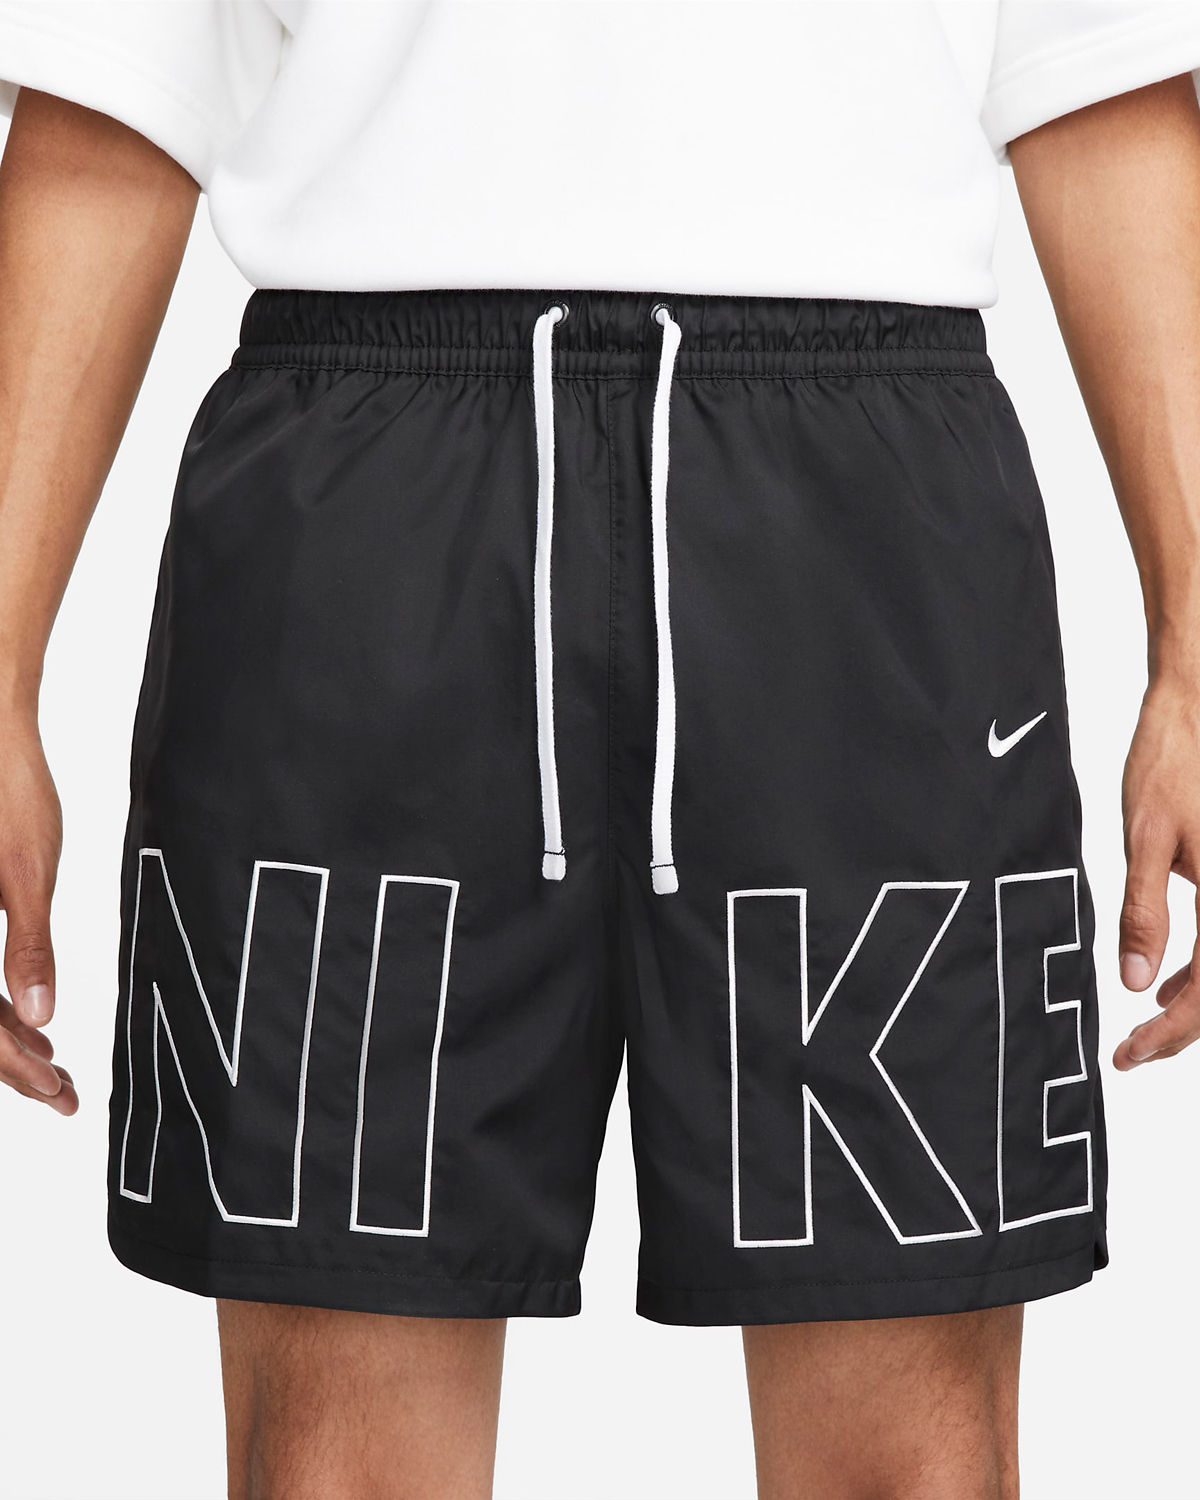 Nike-Sportswear-Woven-Flow-Shorts-Black-White